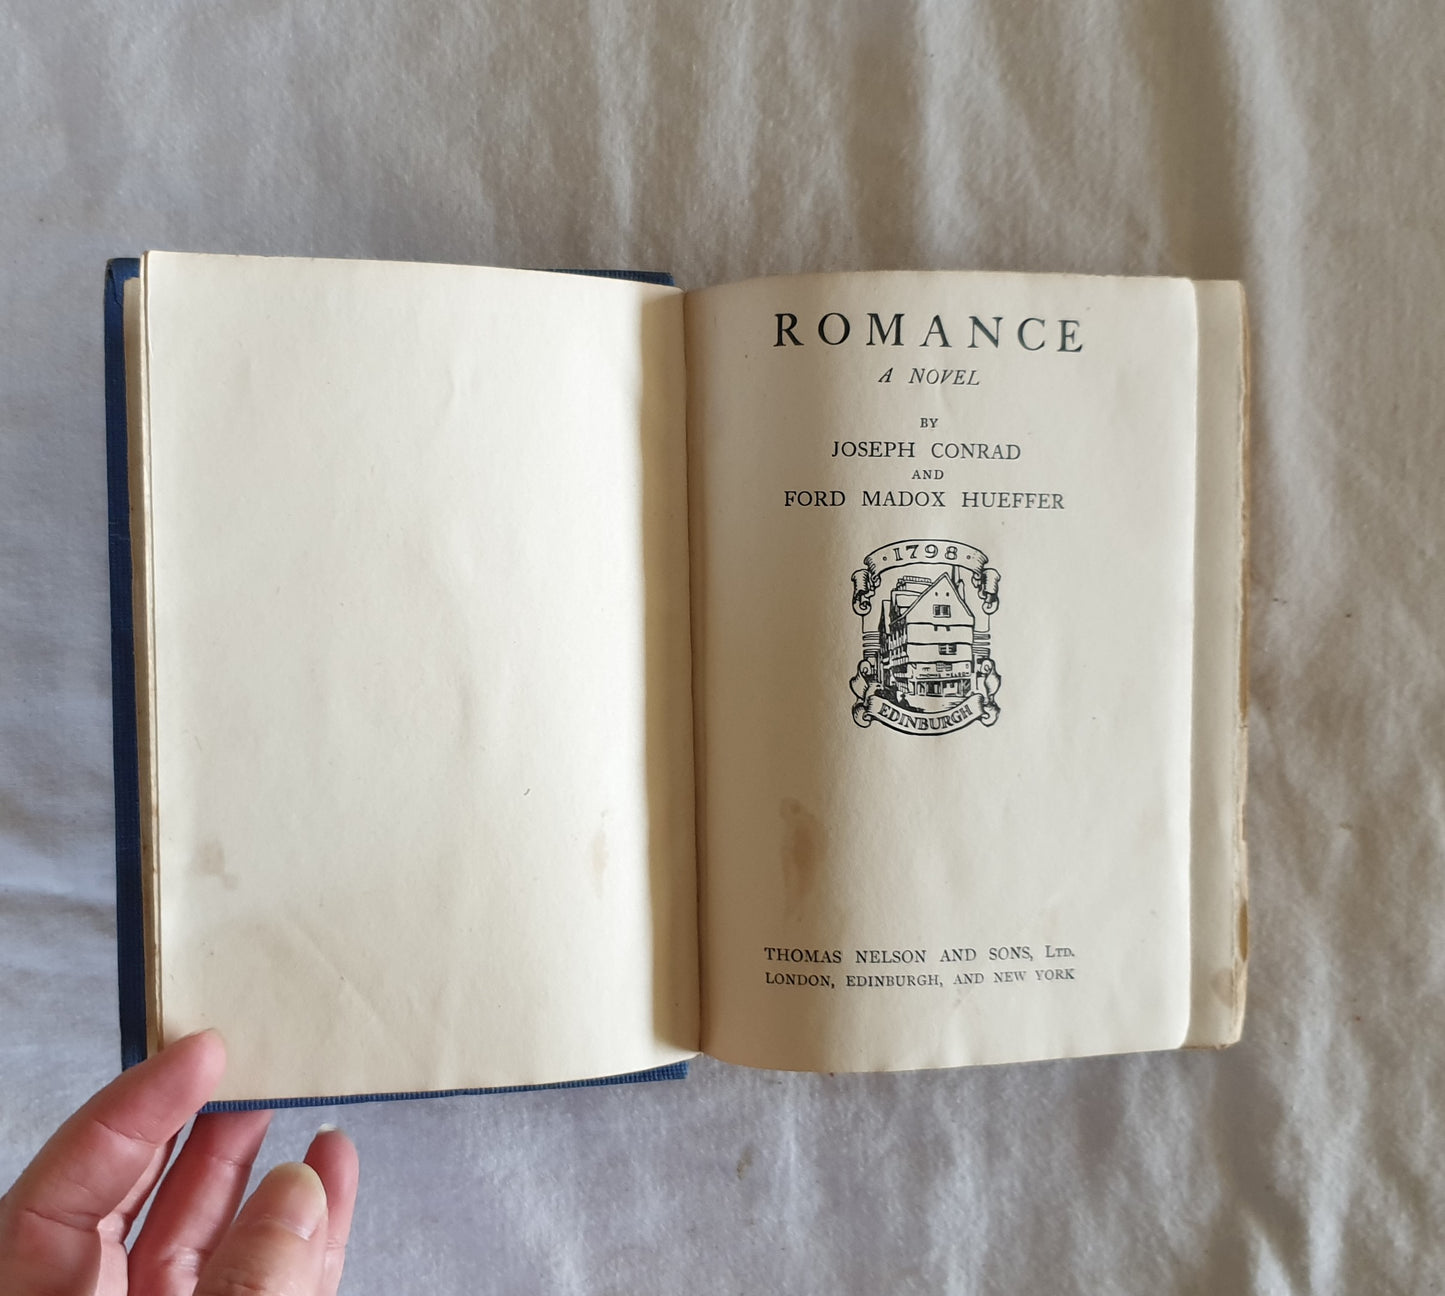 Romance by Joseph Conrad and Ford Madox Hueffer